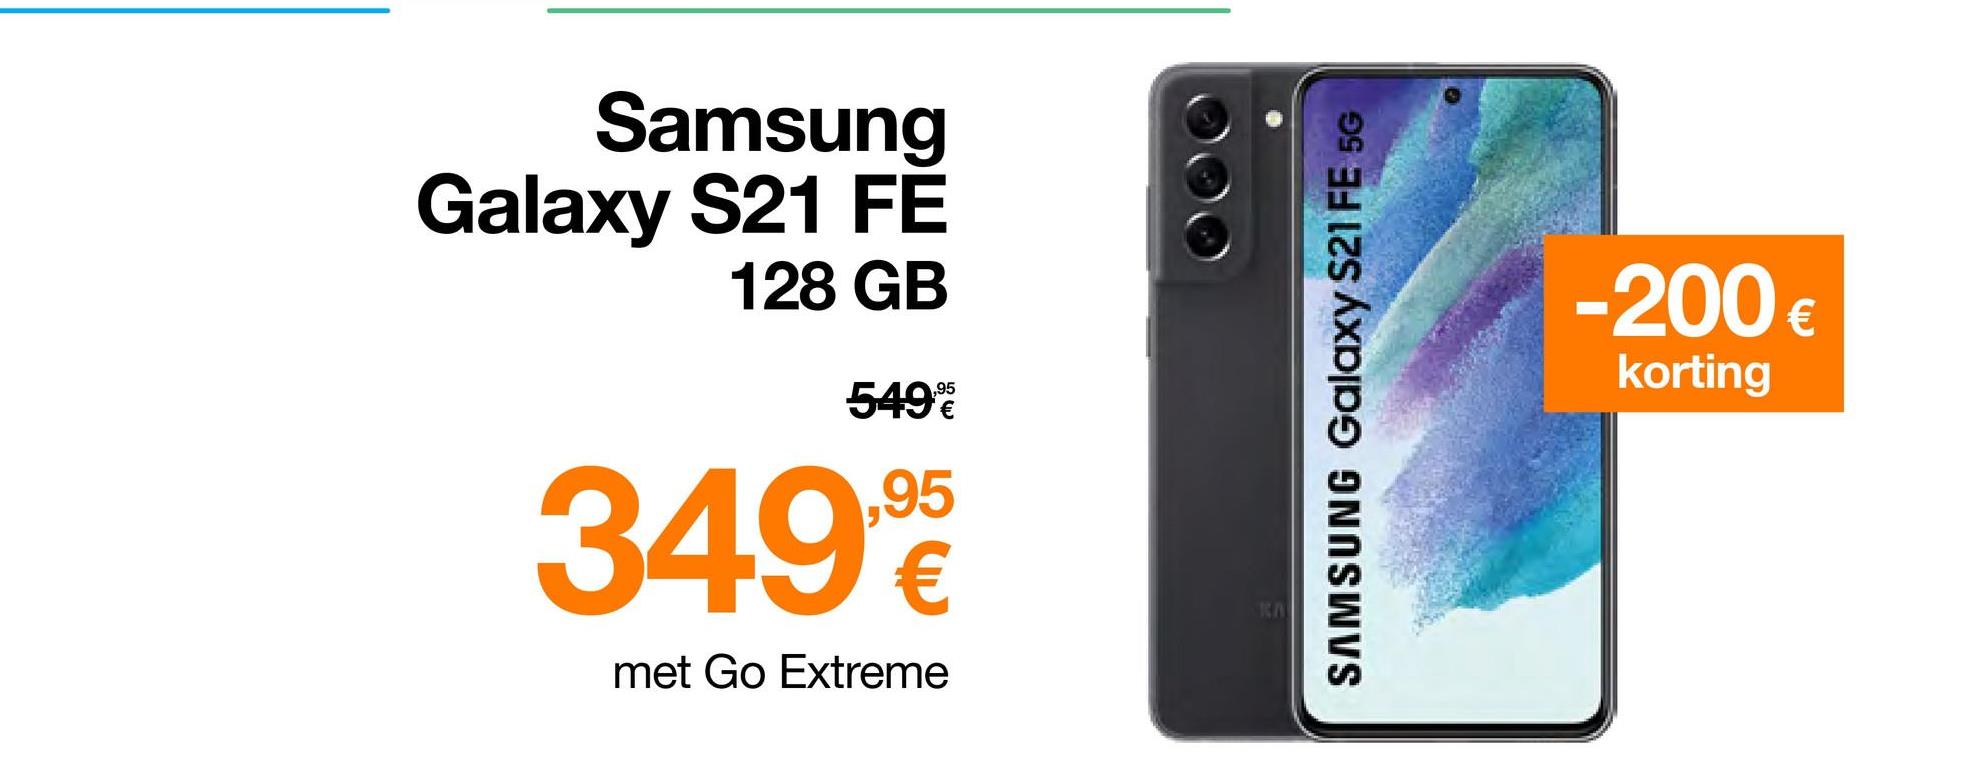 Samsung
Galaxy S21 FE
128 GB
549%
349,9
met Go Extreme
RA
SAMSUNG Galaxy S21 FE 5G
-200 €
korting